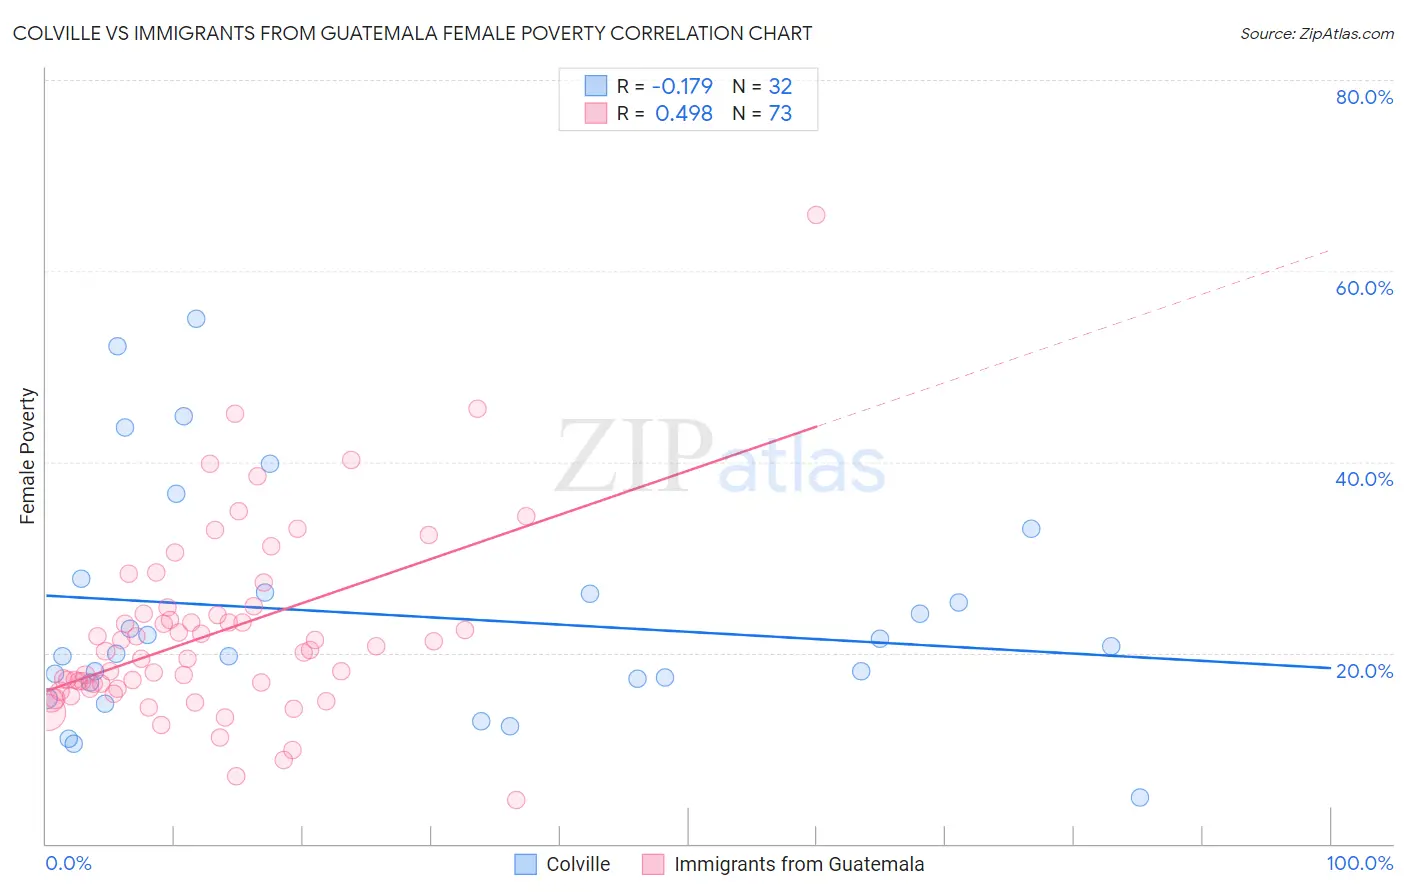 Colville vs Immigrants from Guatemala Female Poverty